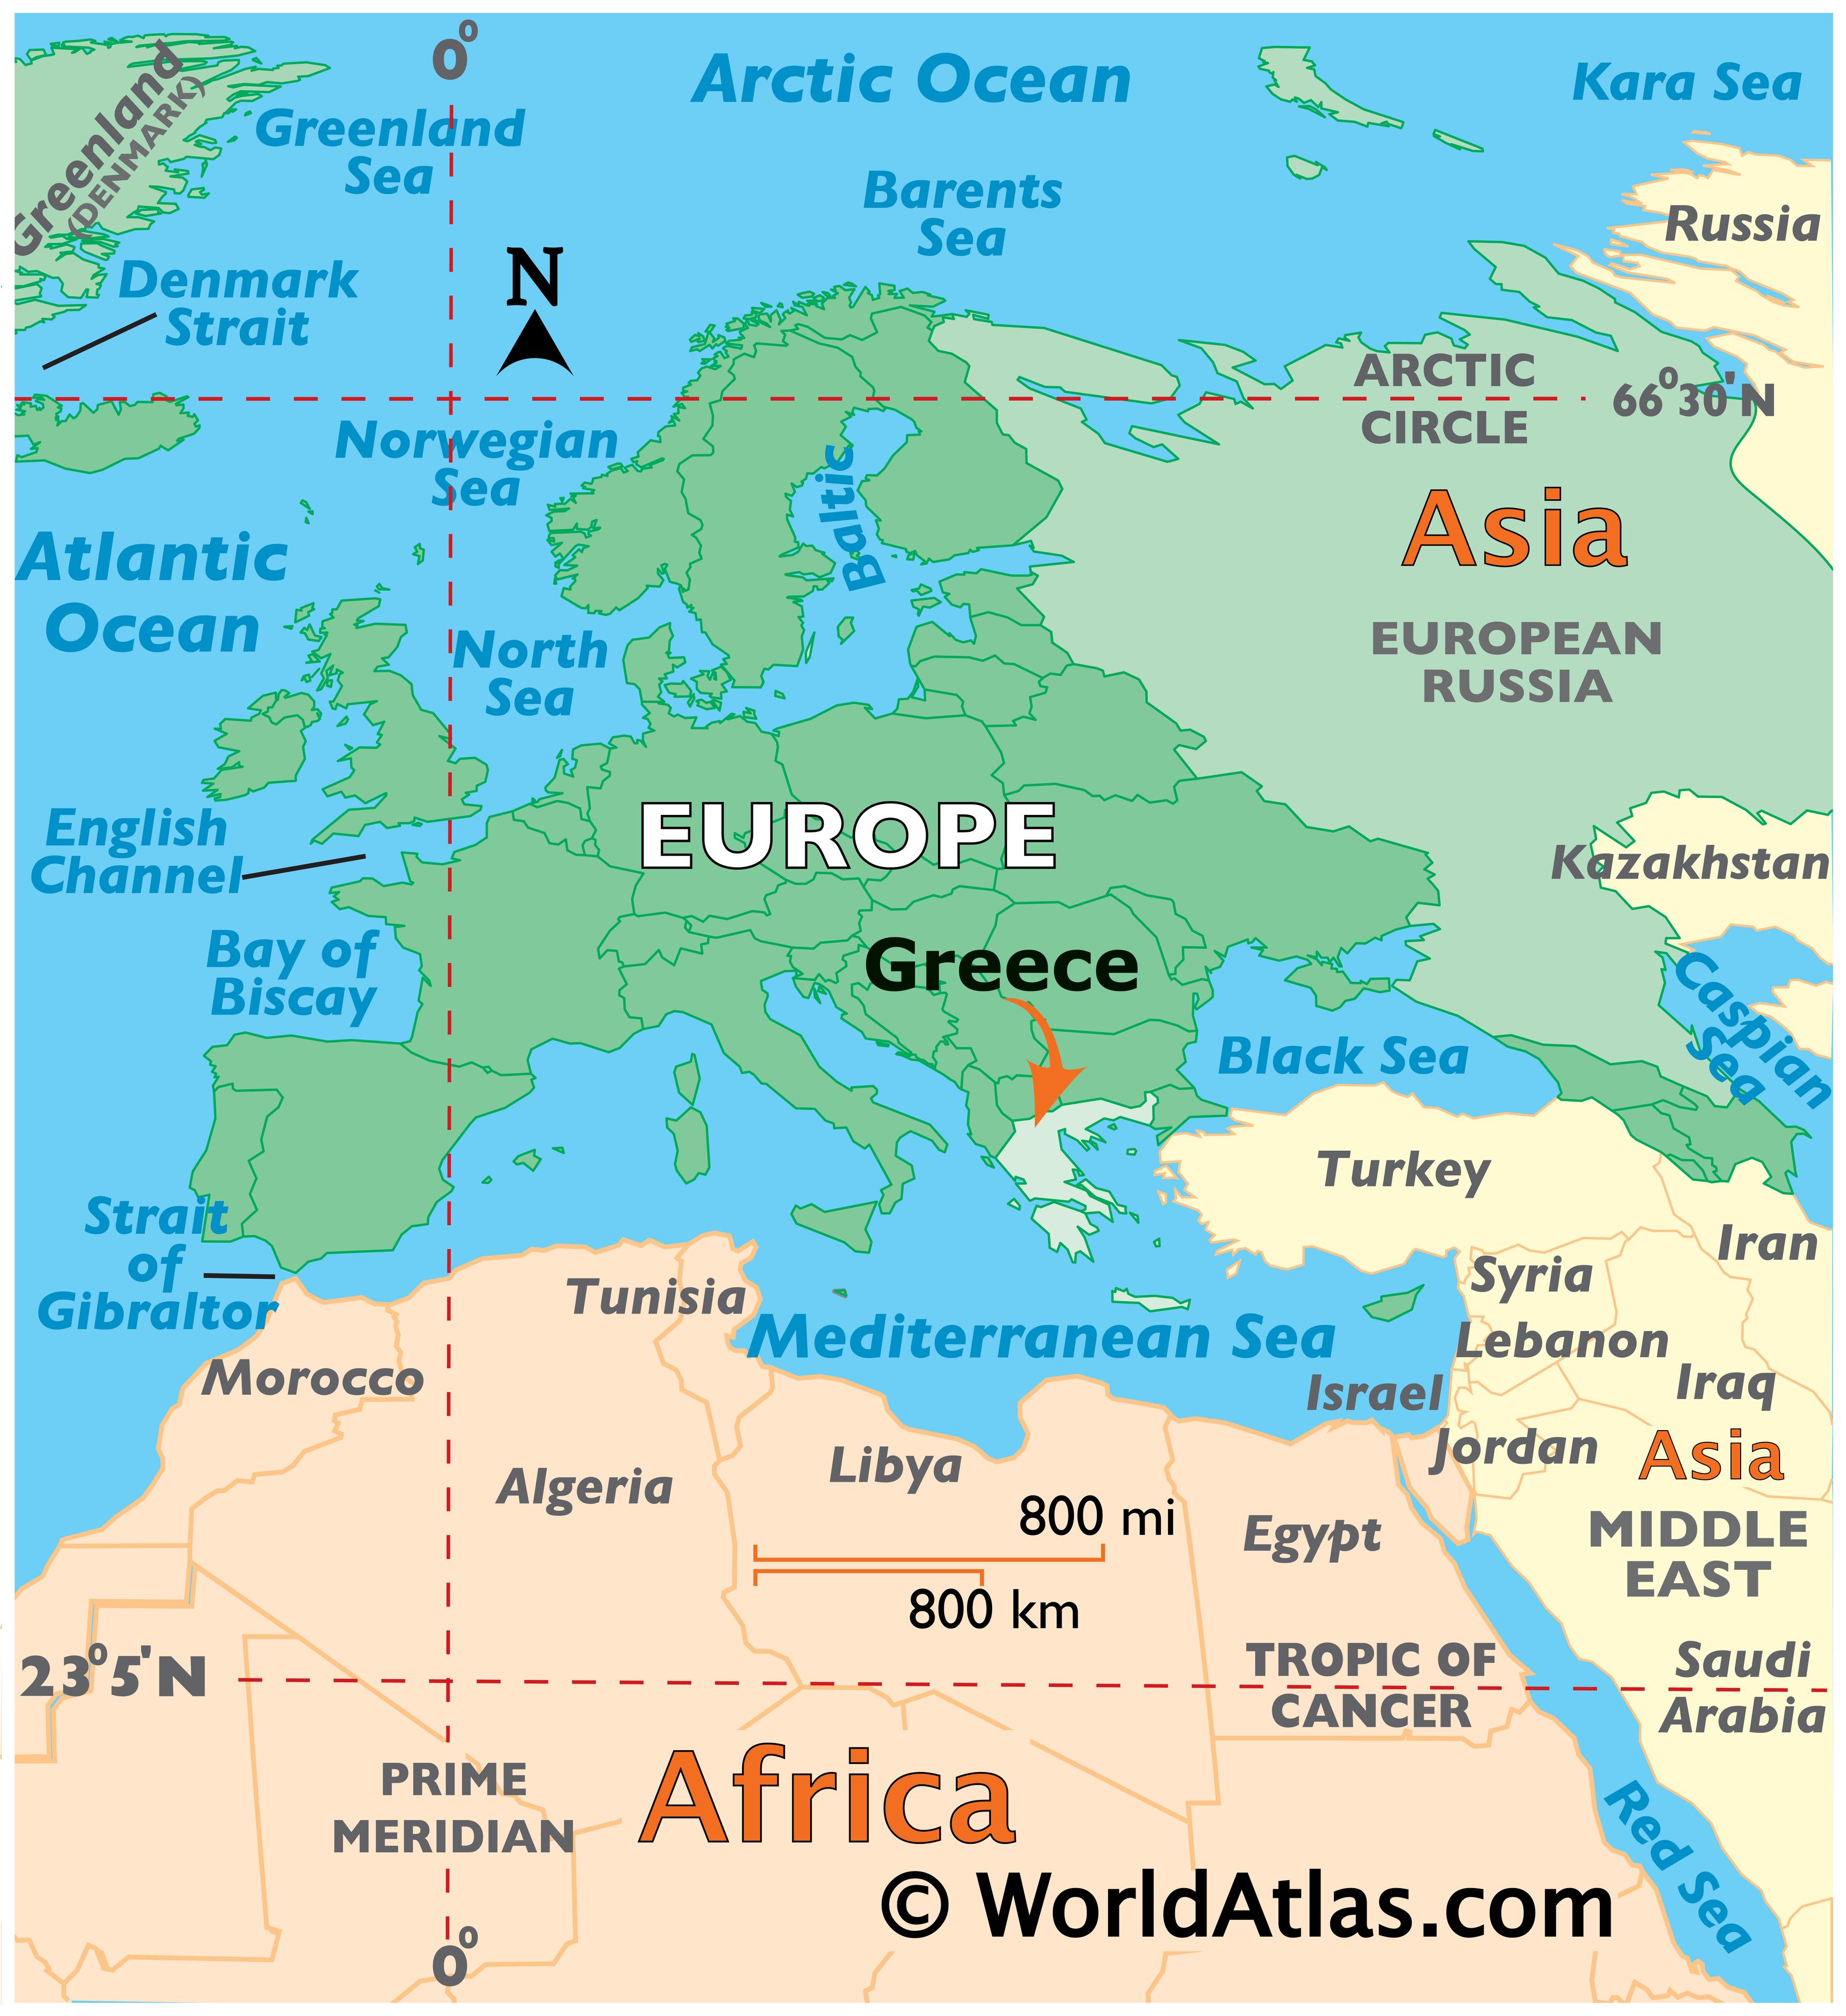  /><br/><p>Europe Greece Map</p></center></div>
<script type='text/javascript'>
var obj0=document.getElementById(